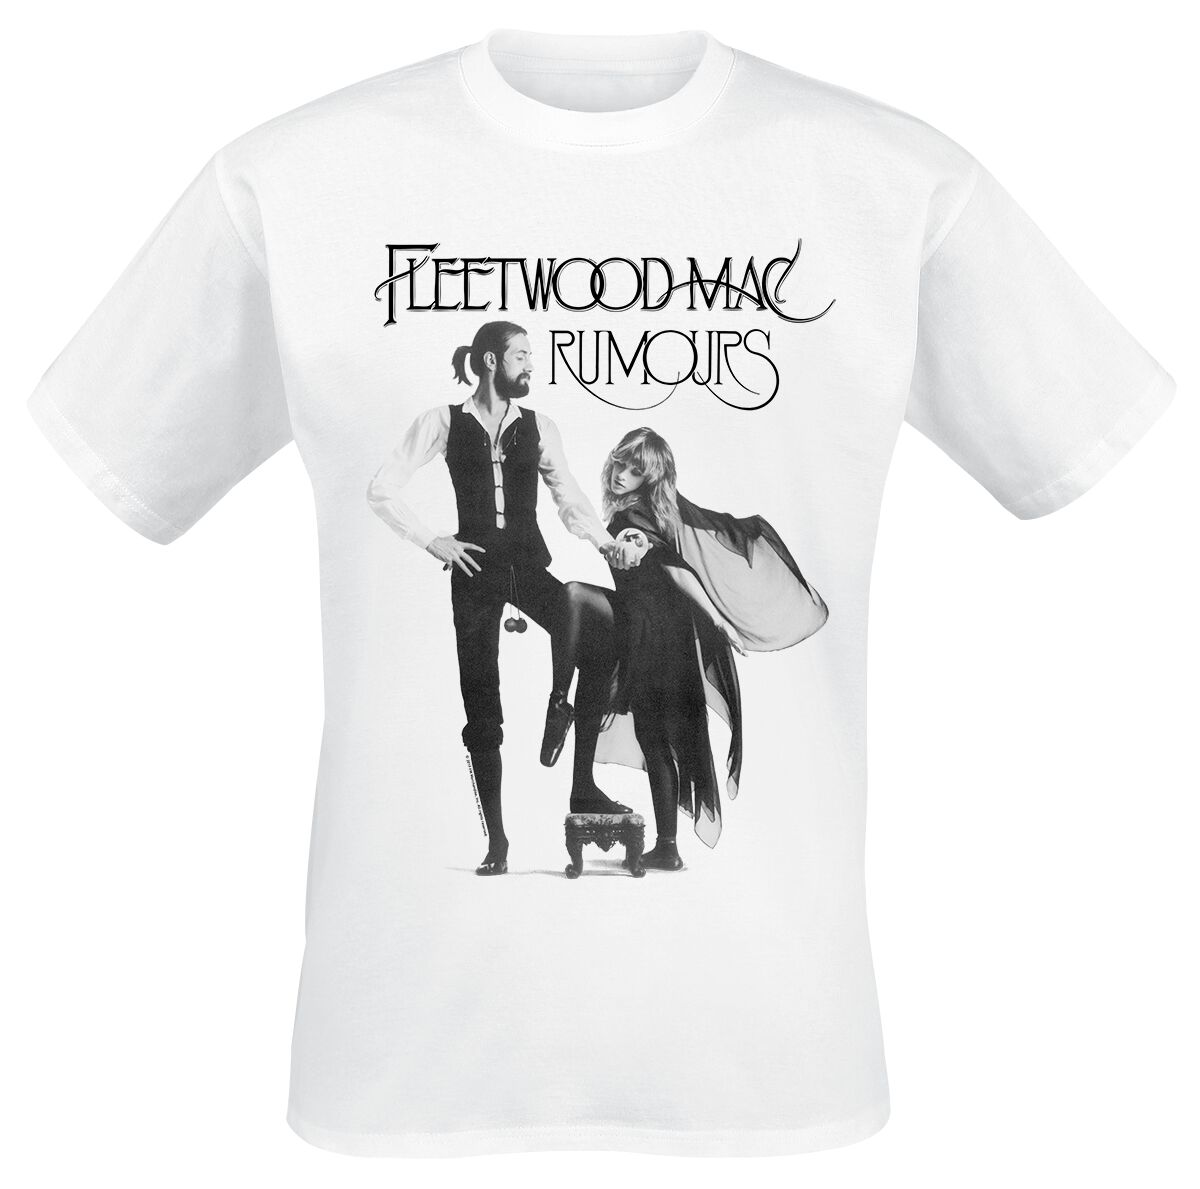 Fleetwood Mac Rumours T-Shirt white